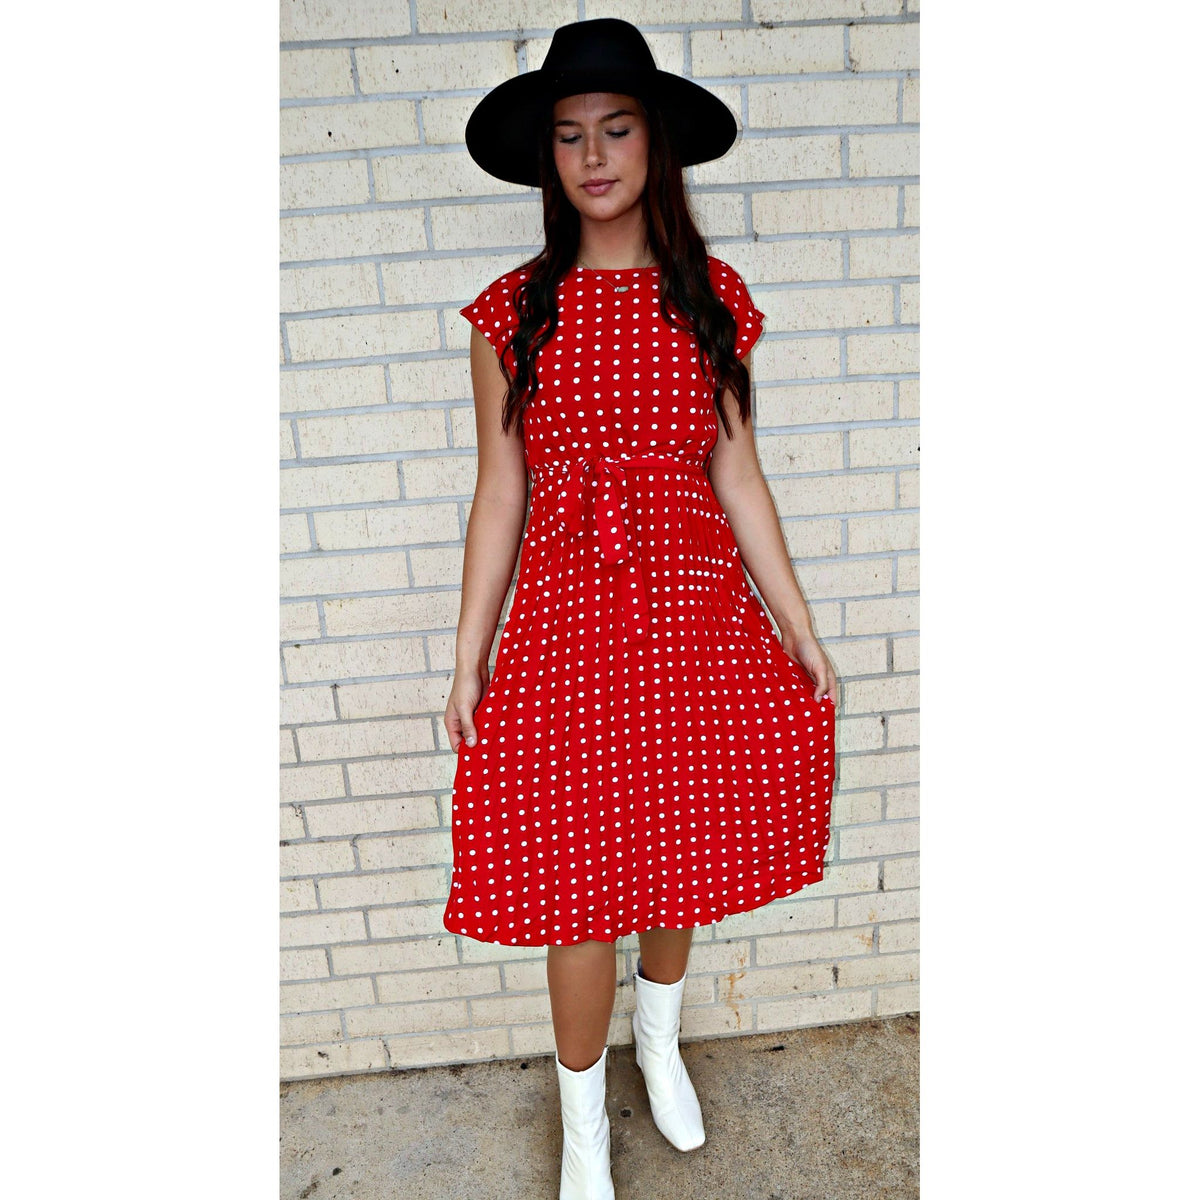 Red dot dress